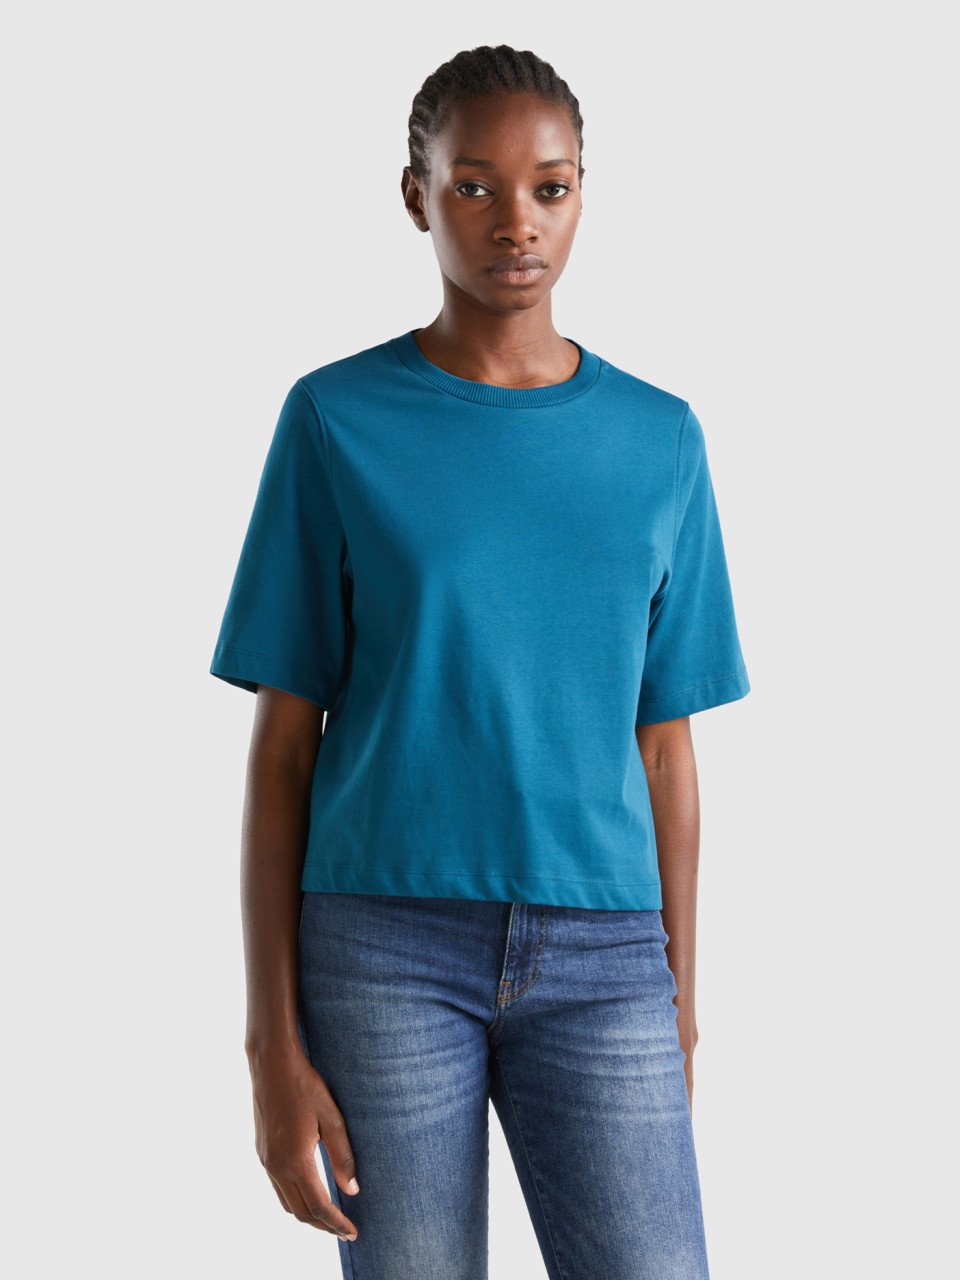 Benetton, 100% Cotton Boxy Fit T-shirt, Teal, Women